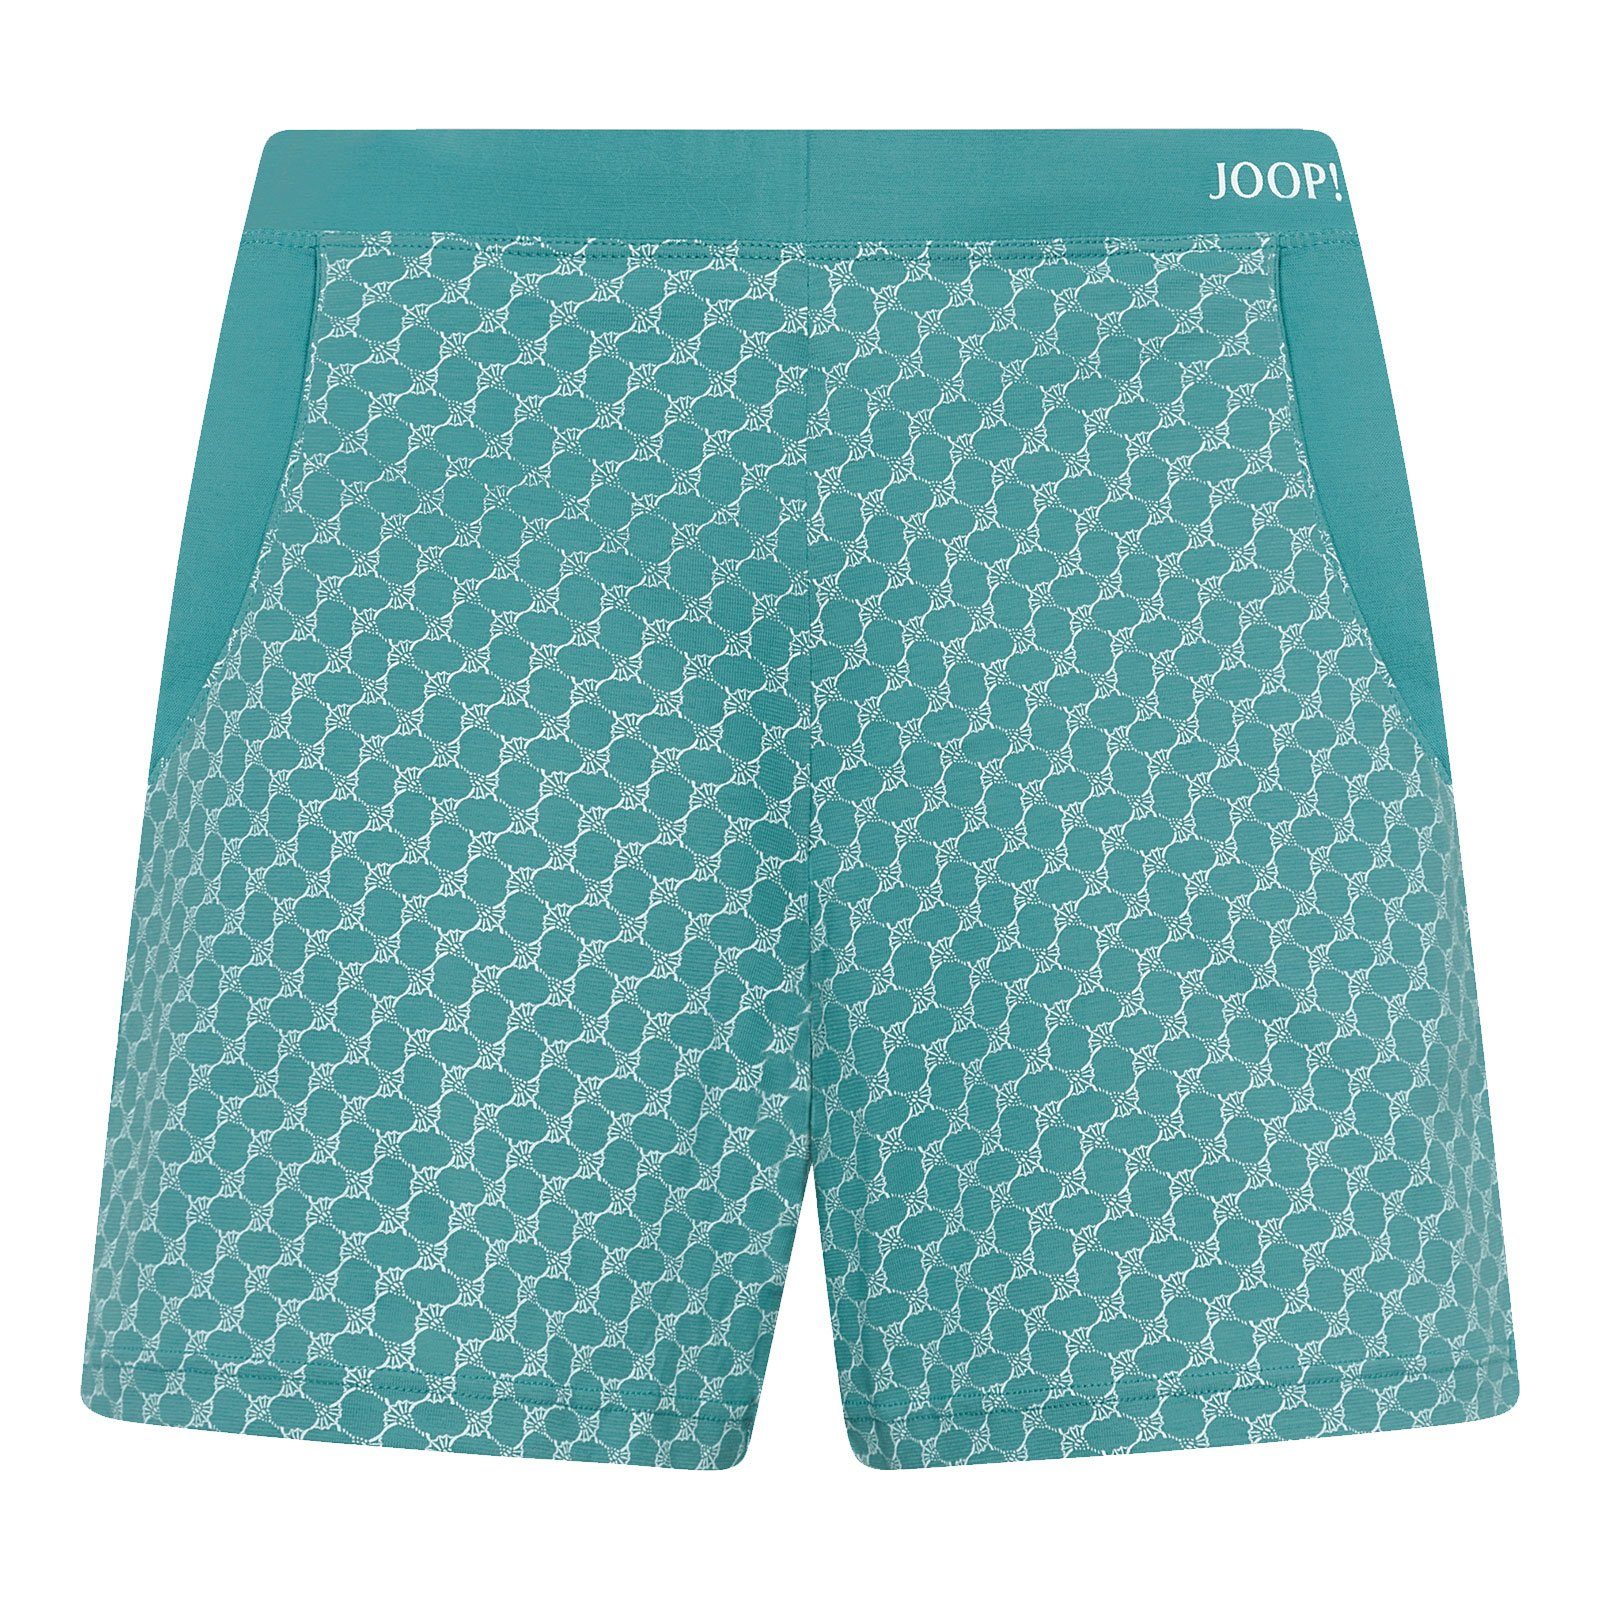 JOOP! Relaxhose Loungewear Shorts im Allover-Cornflower-Design